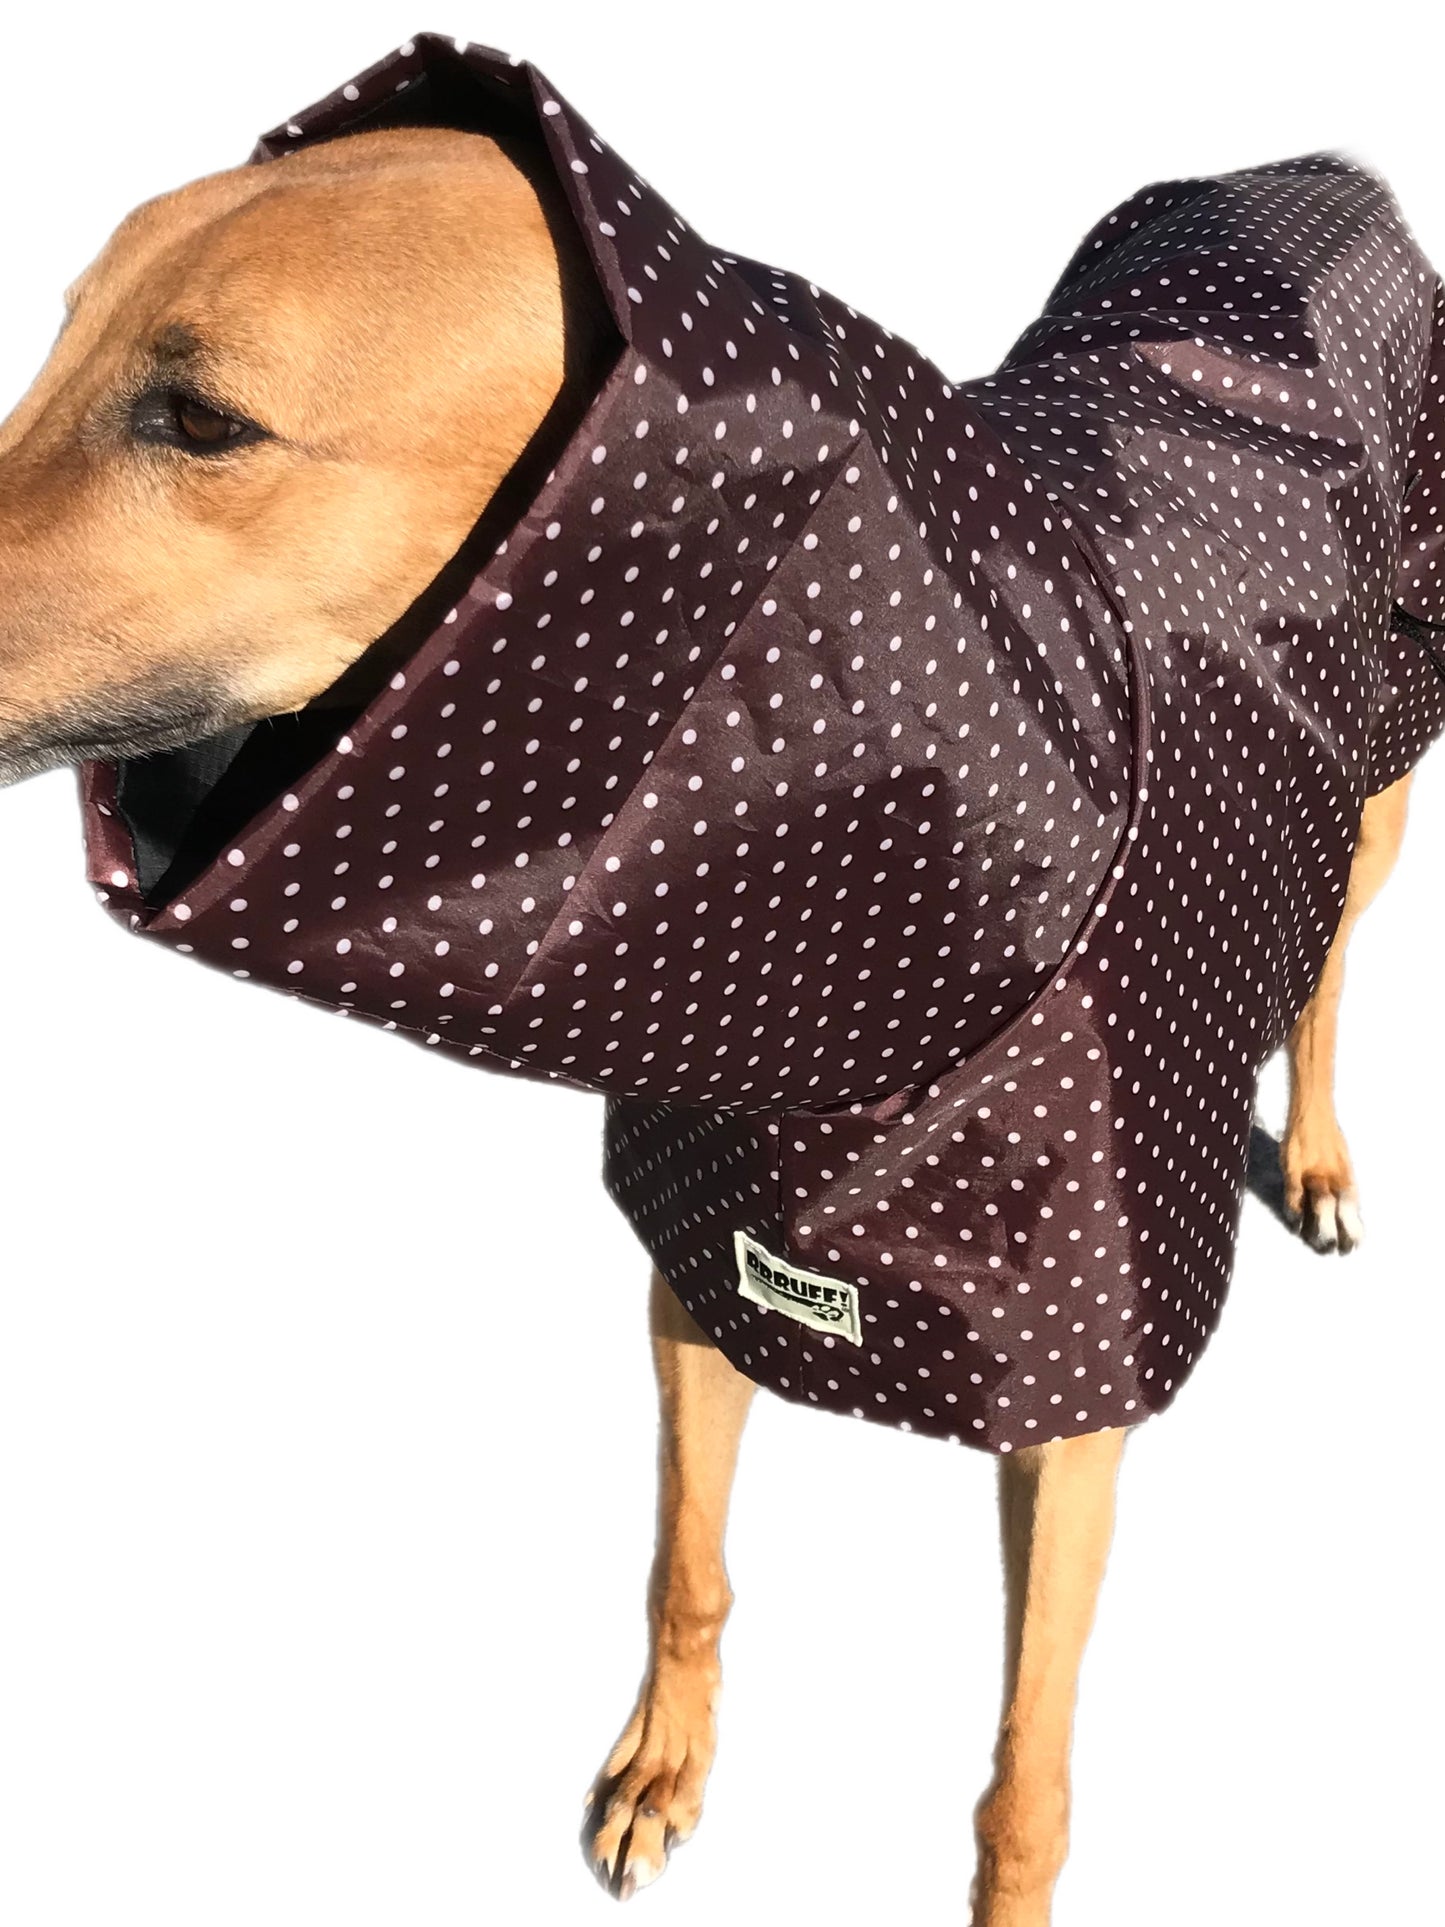 Latte dotty prints Greyhound coat deluxe style, summer rainwear, washable